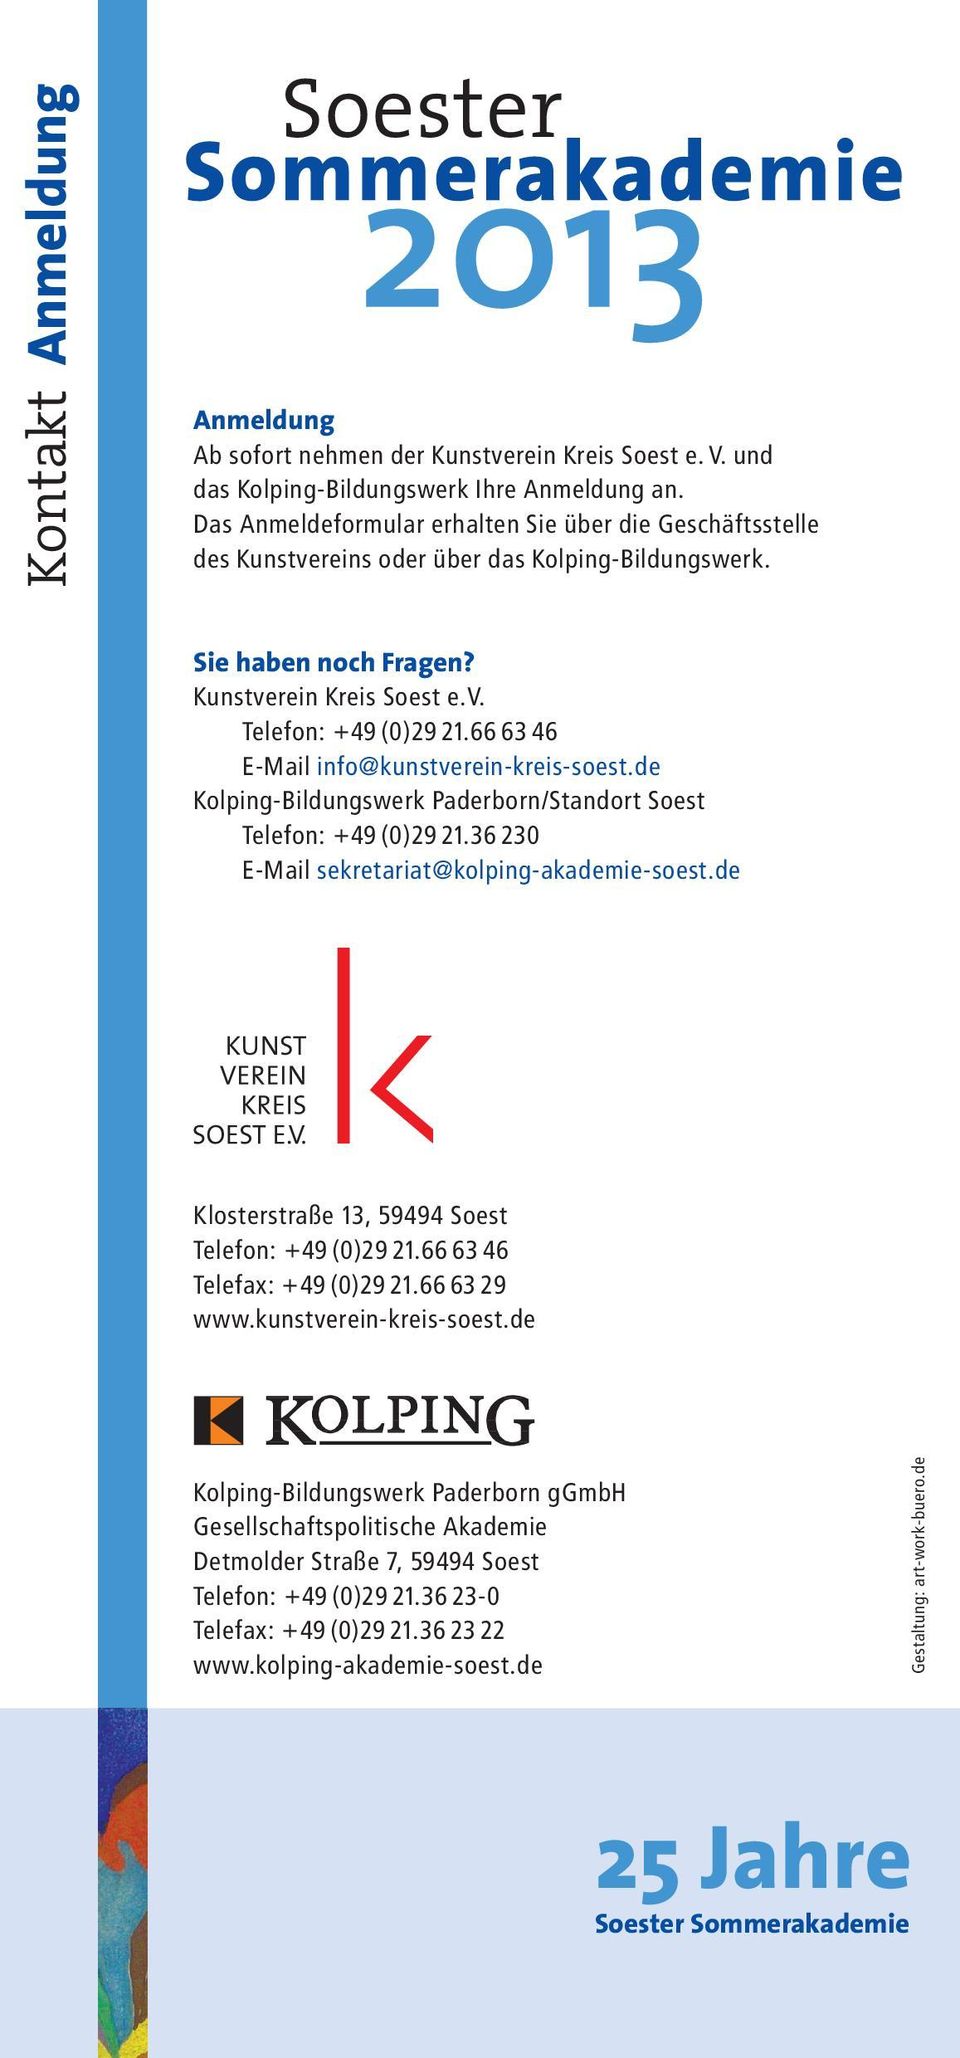 66 63 46 E-Mail info@kunstverein-kreis-soest.de Kolping-Bildungswerk Paderborn/Standort Soest Telefon: +49 (0)29 21.36 230 E-Mail sekretariat@kolping-akademie-soest.